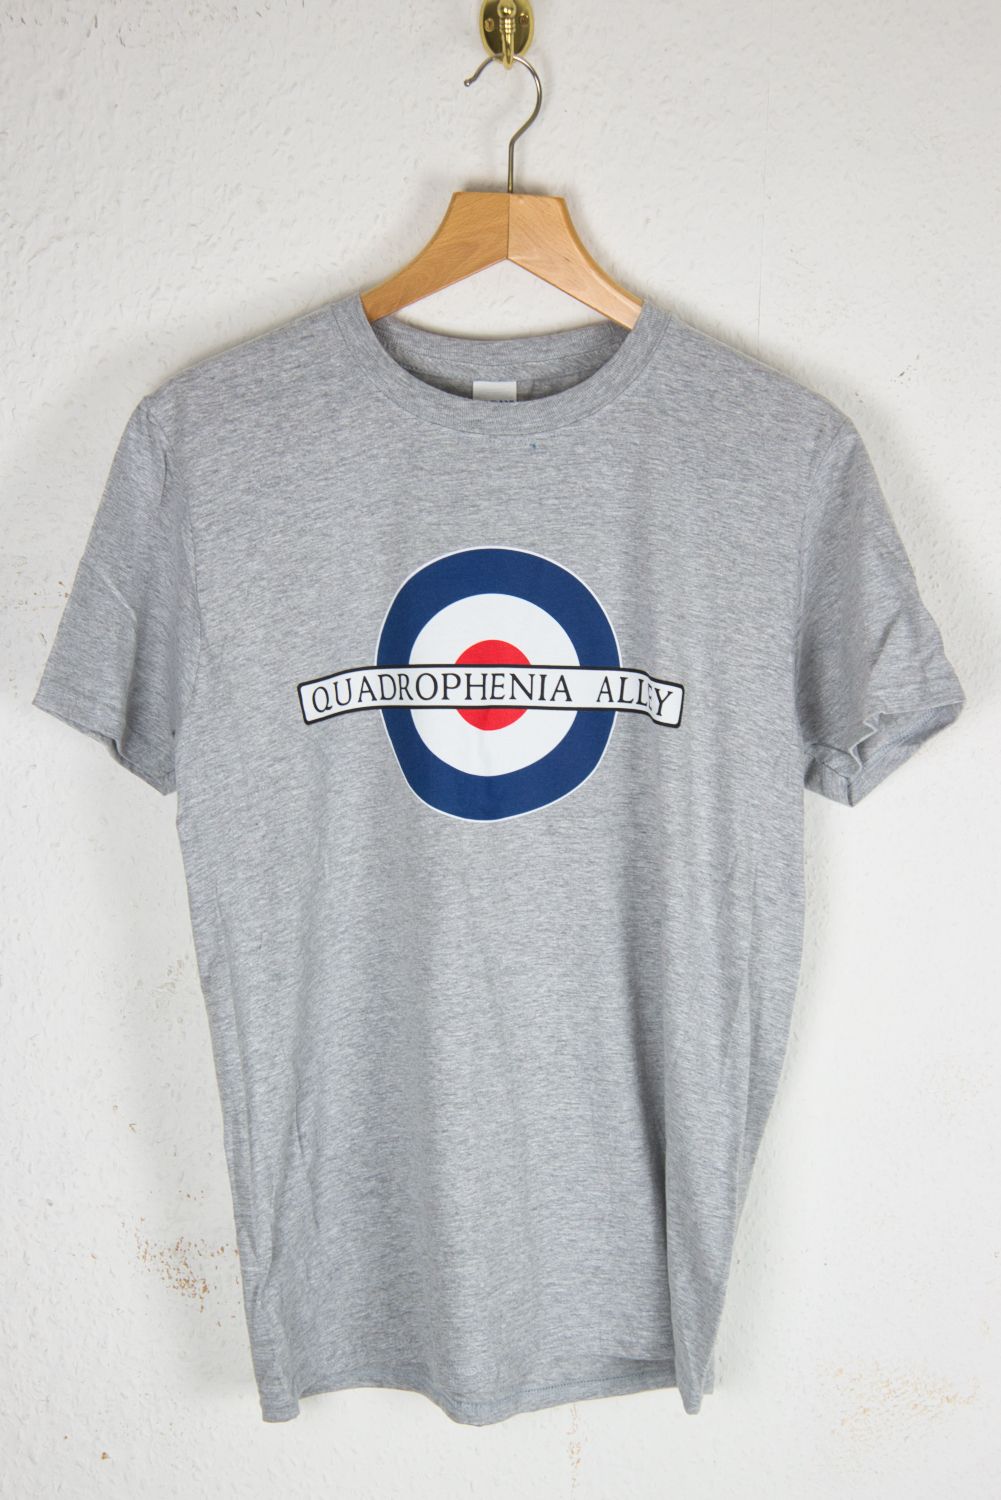 Quadrophenia Alley Men's Exclusive Mod Target Print T-Shirt Grey